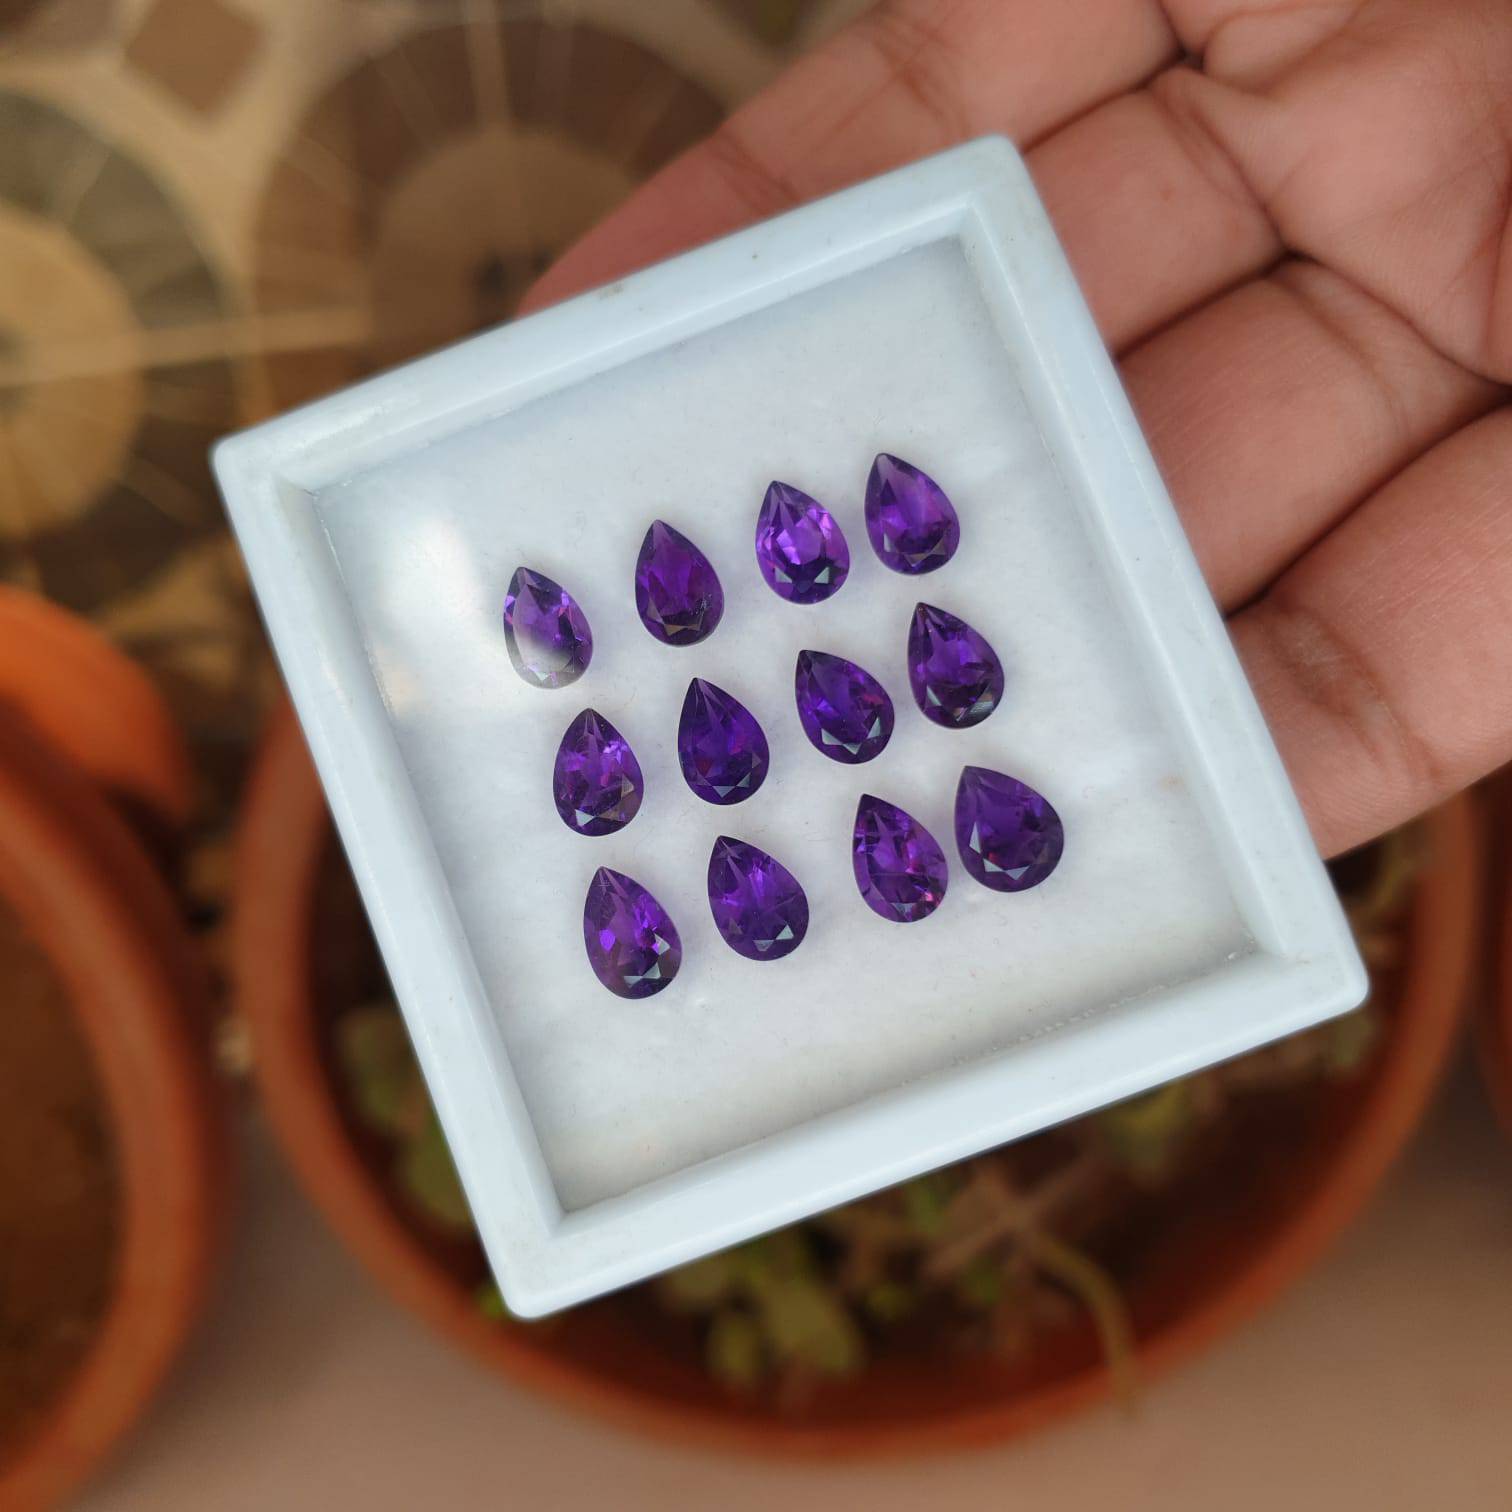 SALE🔥 12 Pcs Natural Amethyst Faceted Gemstones | Pear Shape, Sizes: 8x6mm - The LabradoriteKing